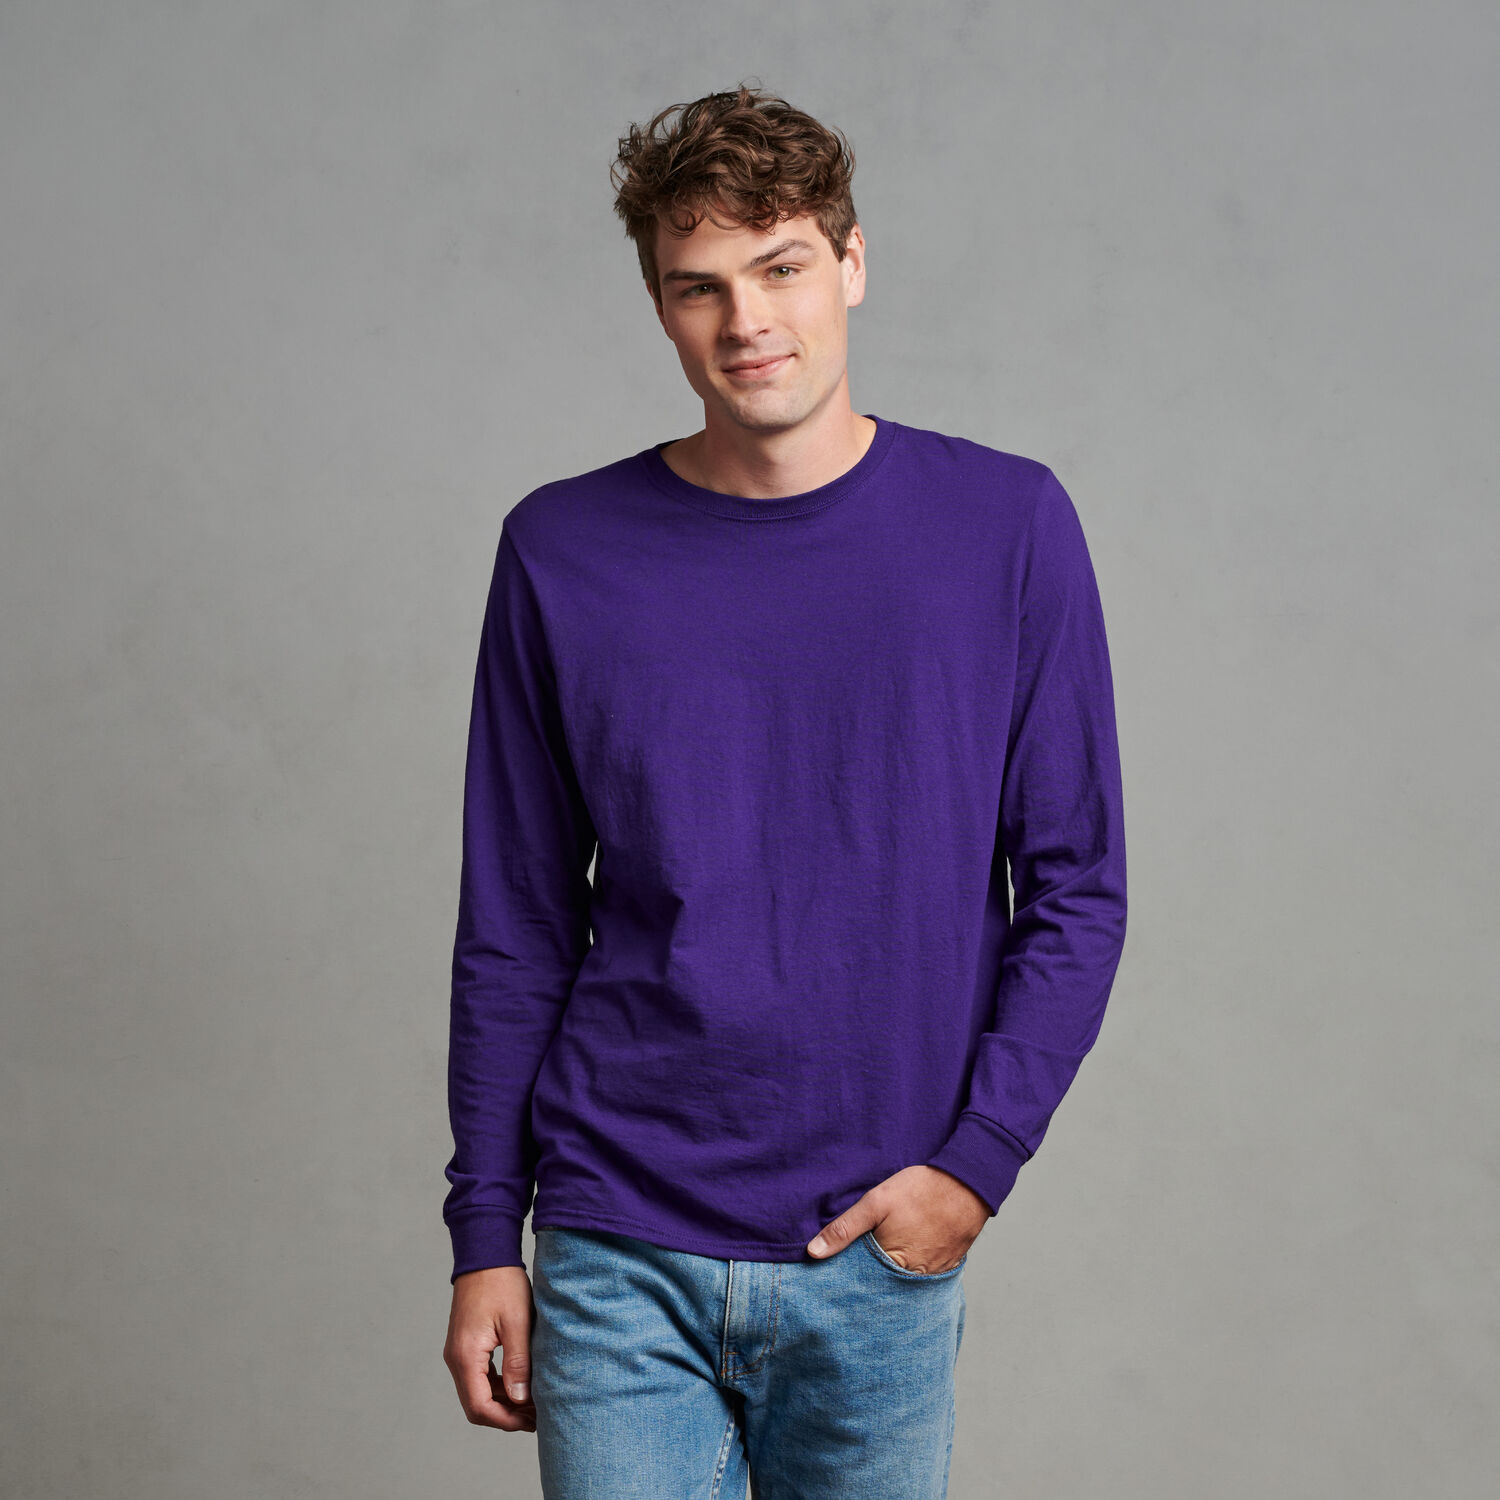 Men's Cotton Performance Long Sleeve T-Shirt Purple